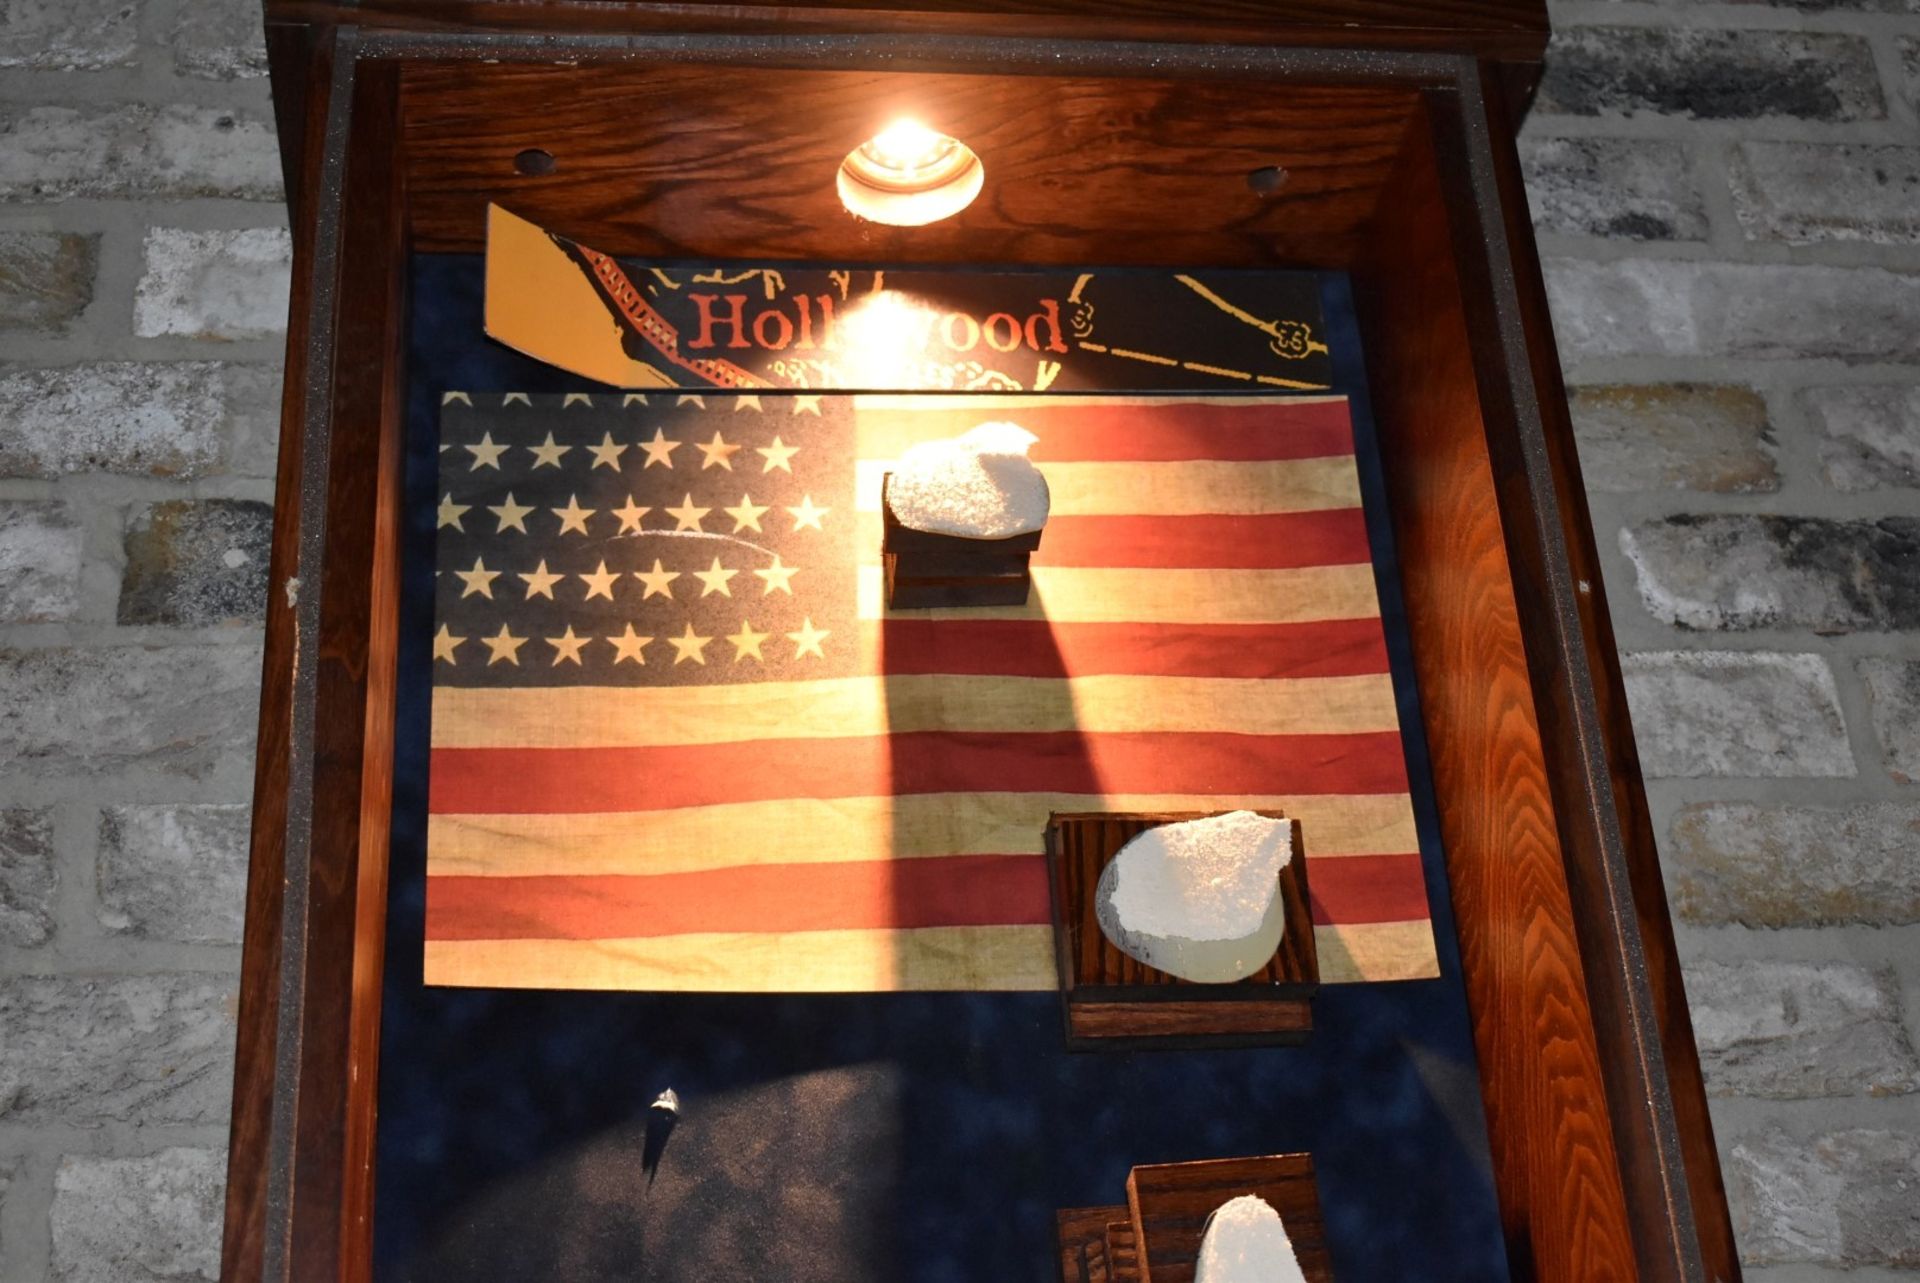 1 x Americana Wall Mounted Illuminated Display Case - SKATEBOADING - American Themed Showcase - Image 4 of 5